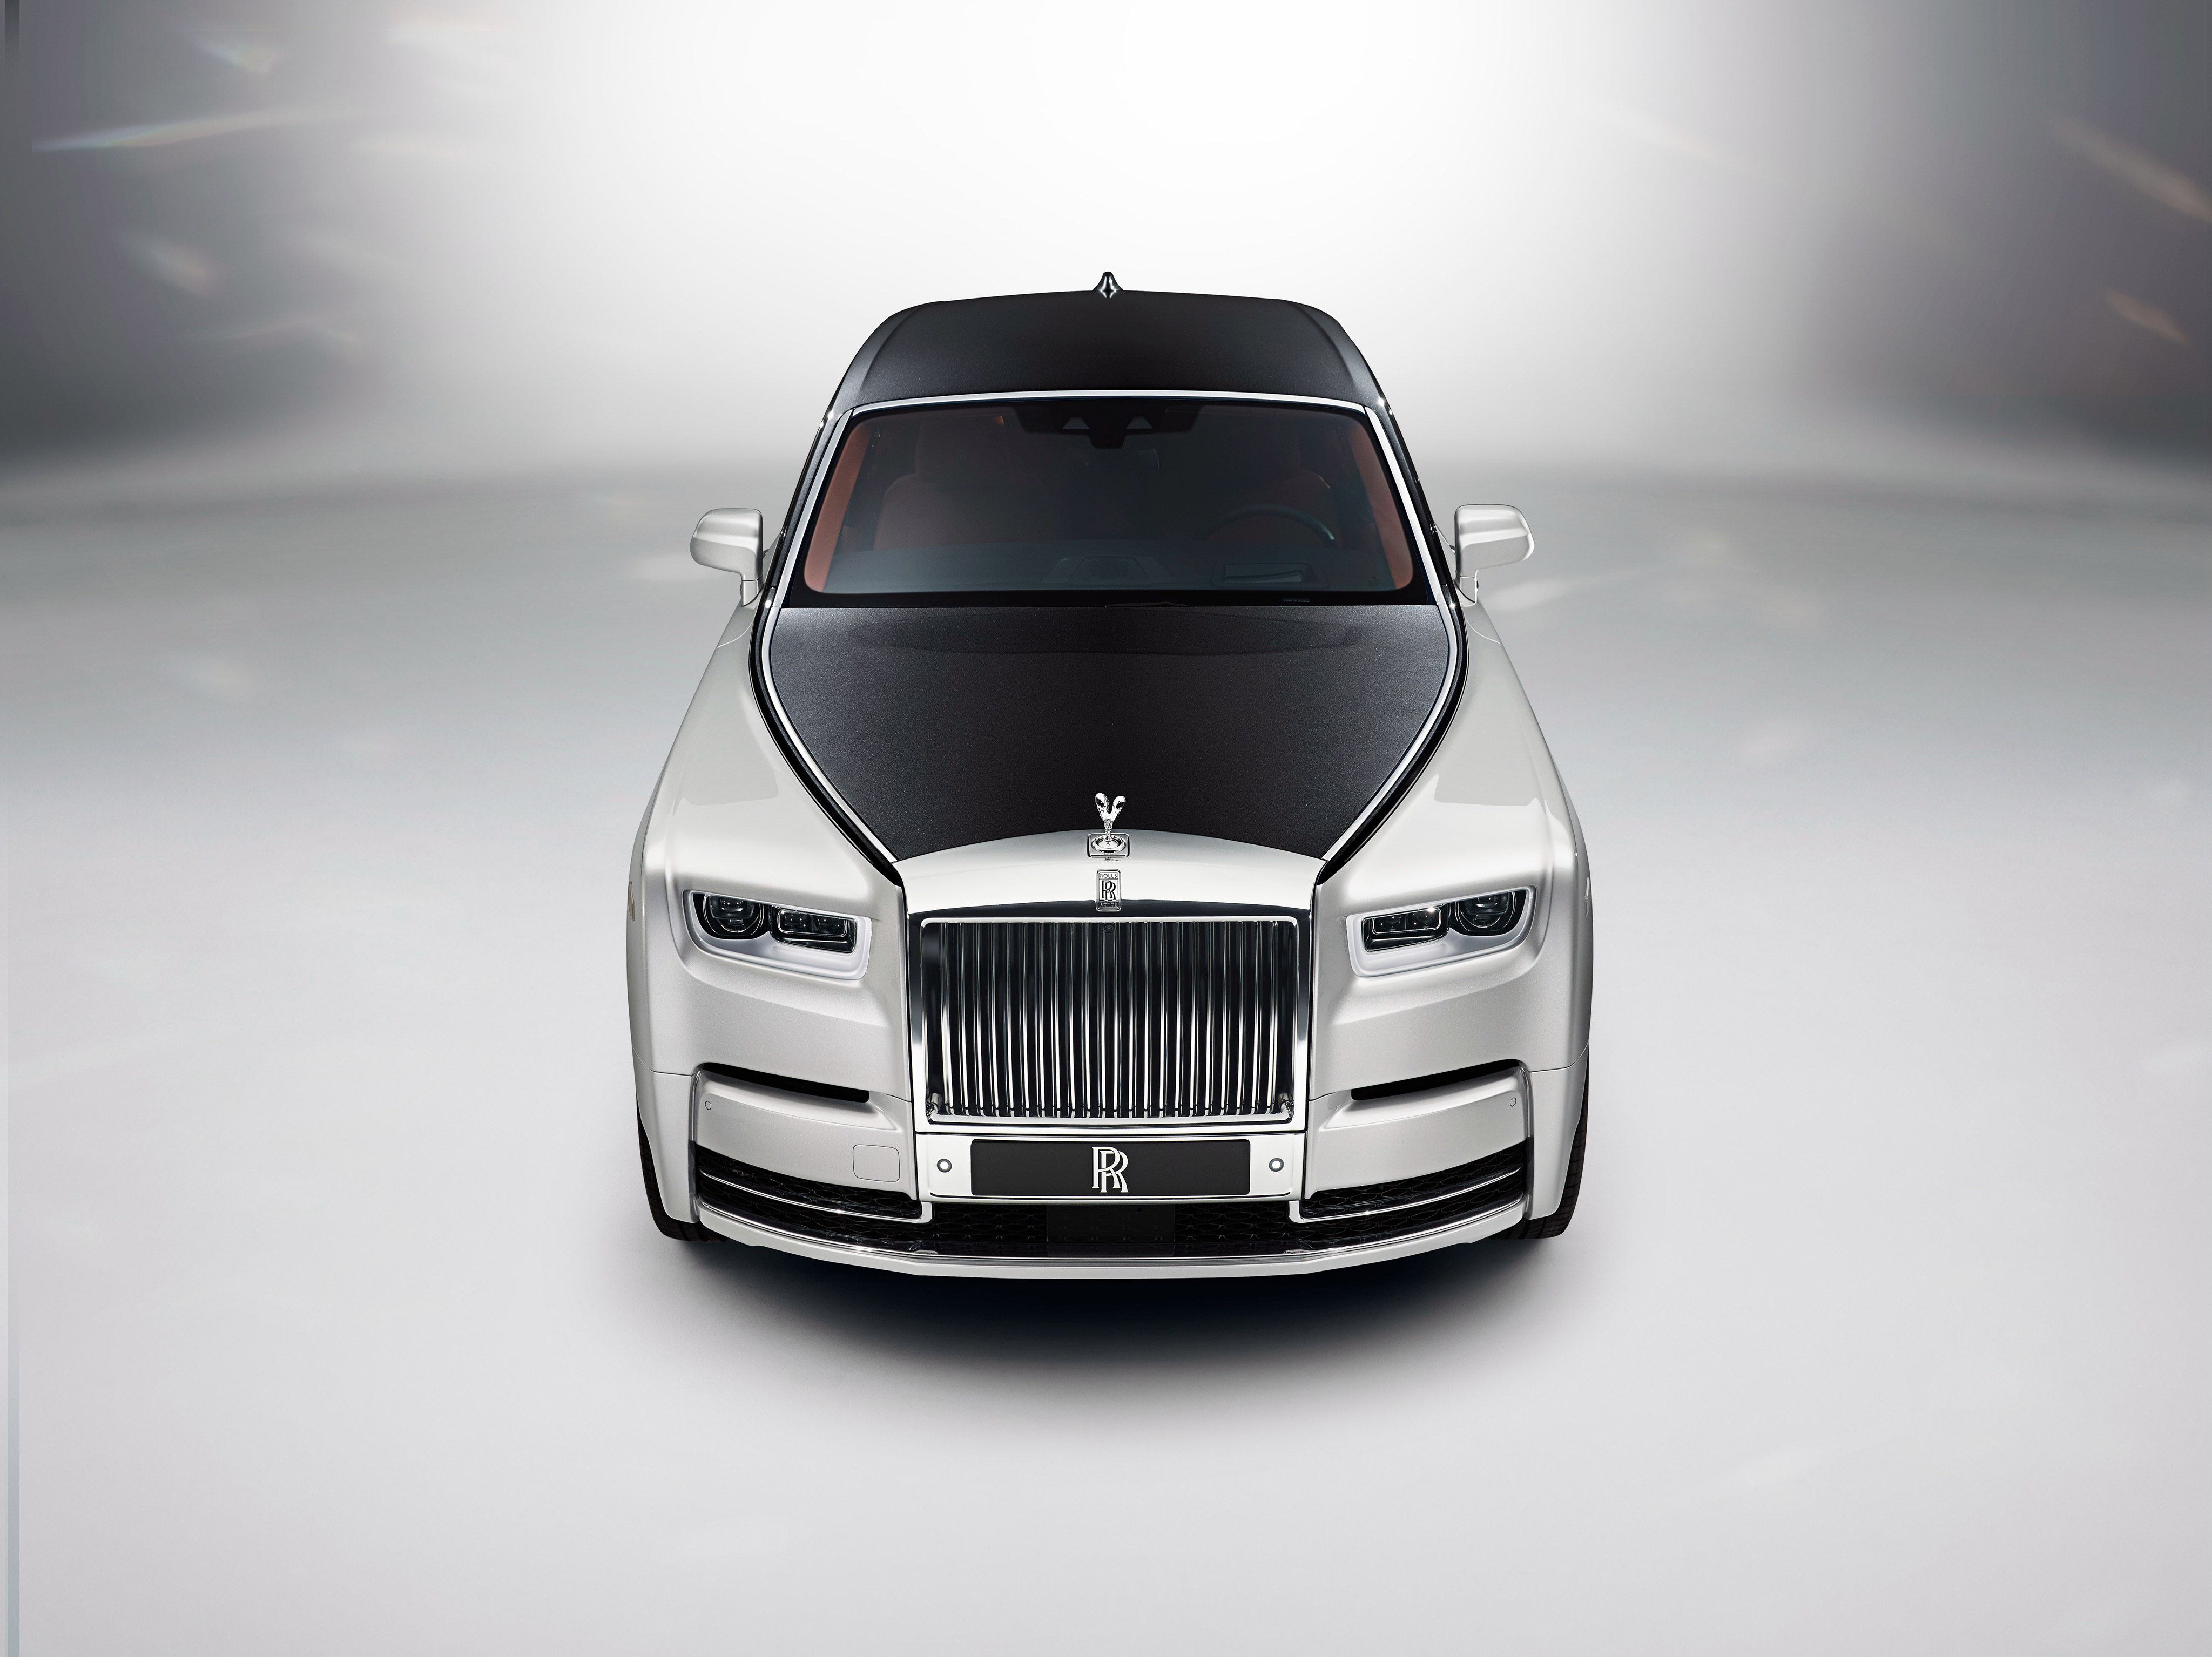 Rolls Royce Phantom on white background